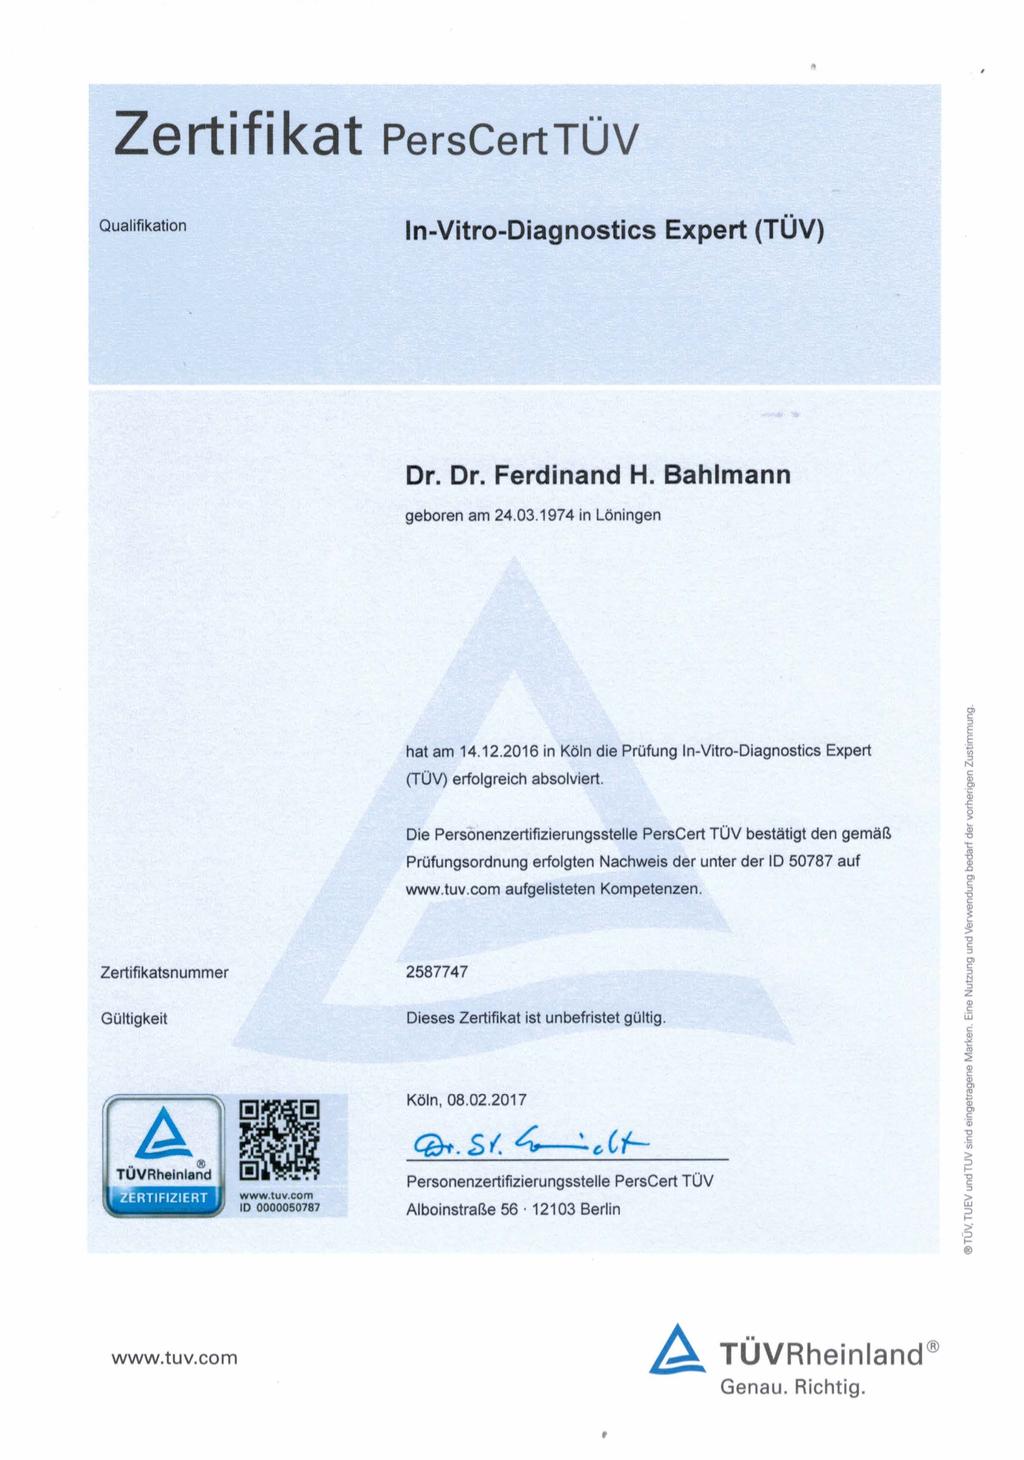 Zertifikat PersCertTüV Qualifikation ln vitro diagnostics Expert TüV Dr Dr